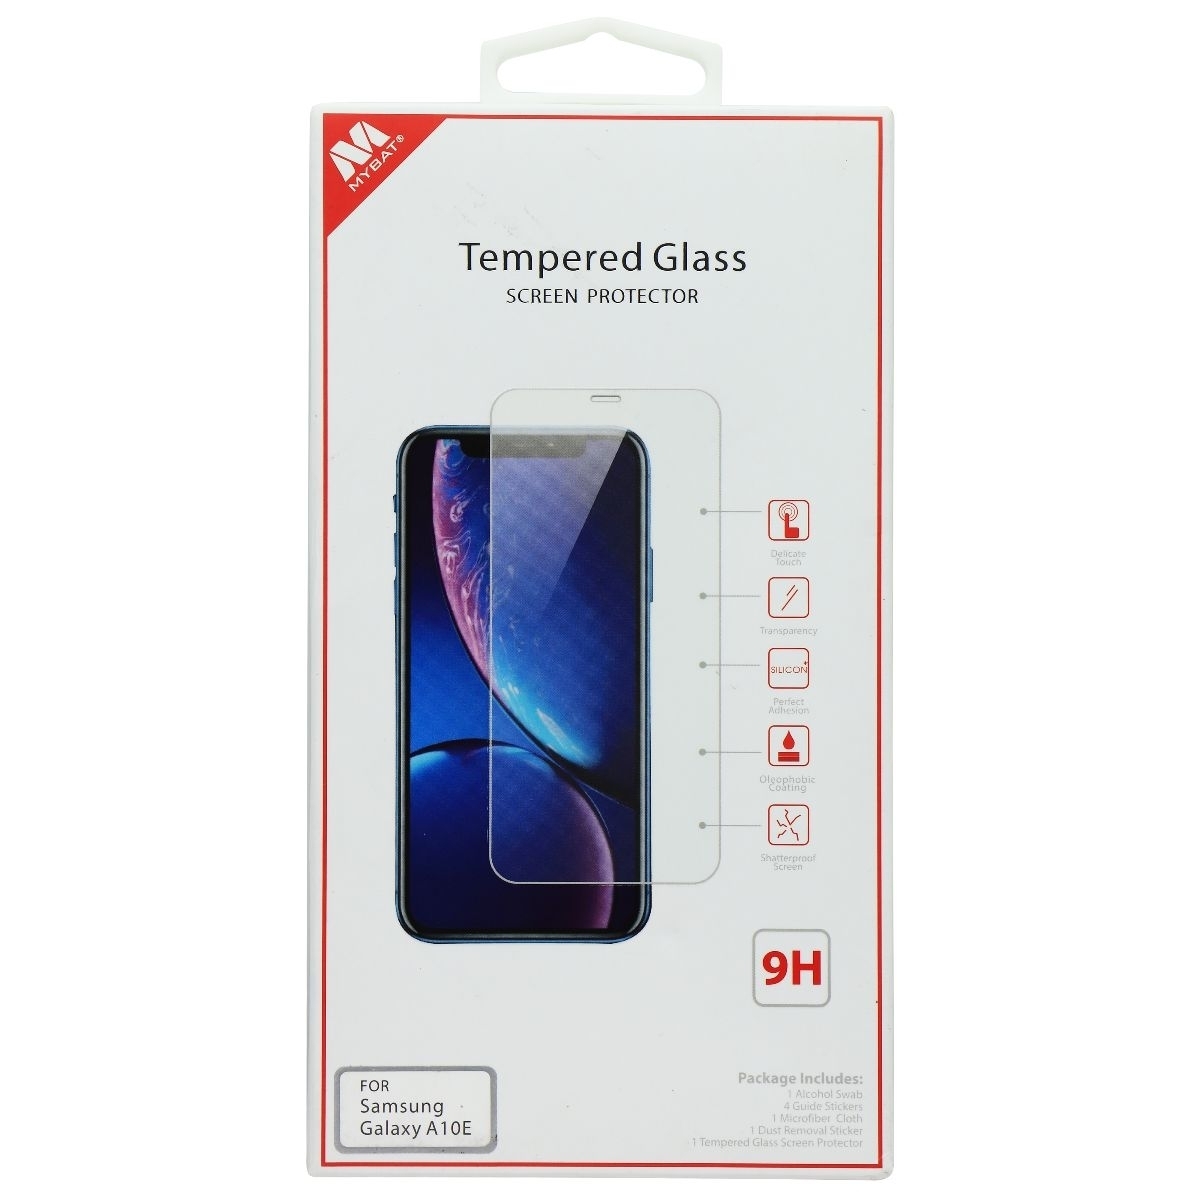 MyBat Tempered Glass Screen Protector For Samsung Galaxy A10E - Clear (Refurbished)